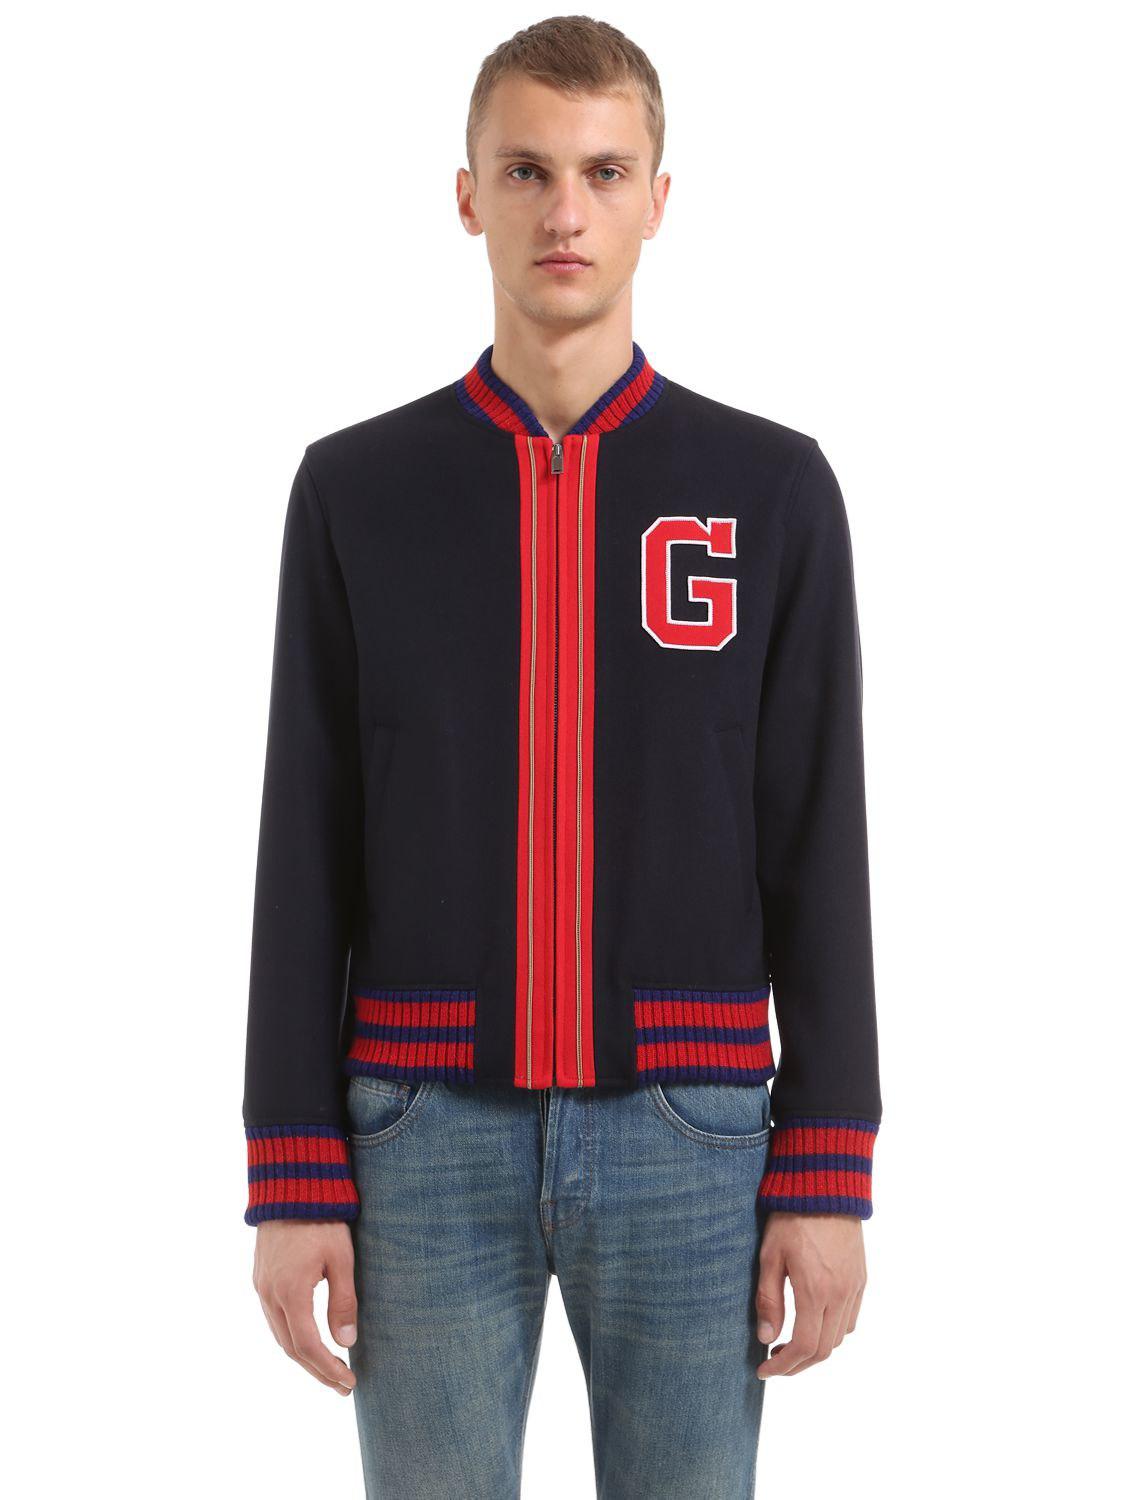 Gucci Wool Felt Varsity Jacket in Navy (Blue) for Men - Lyst